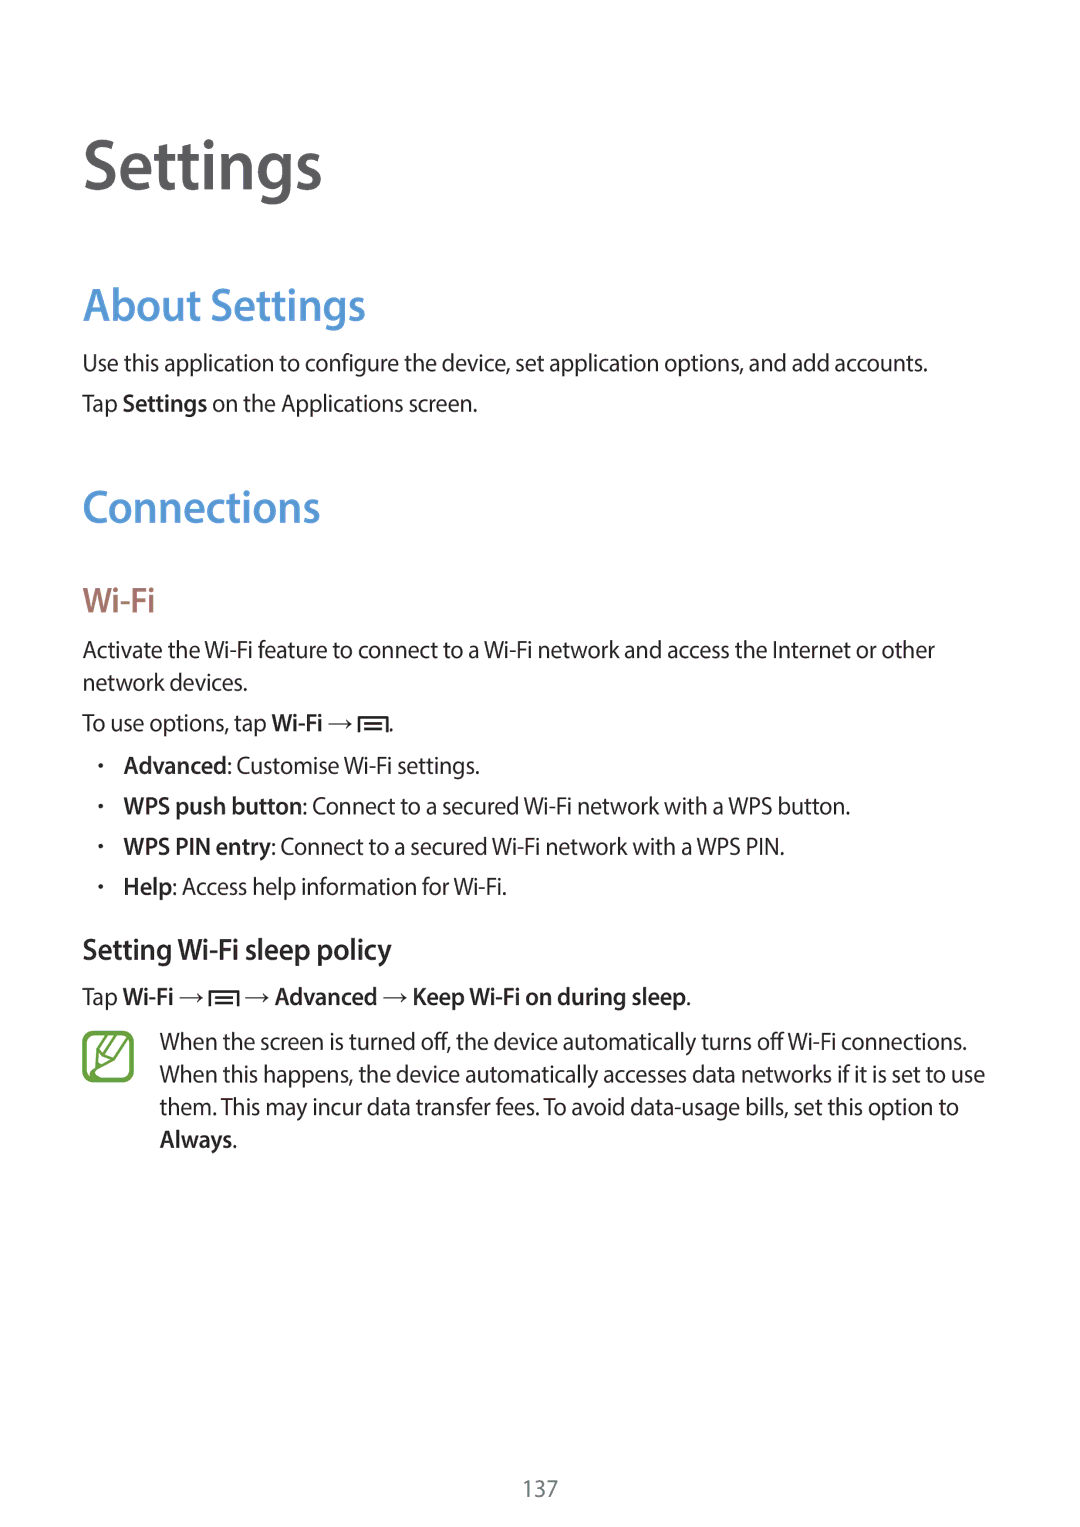 Samsung SM-N7500ZKATHR, SM-N7500ZKACAC, SM-N7500ZKAKSA manual About Settings, Connections, Setting Wi-Fi sleep policy 